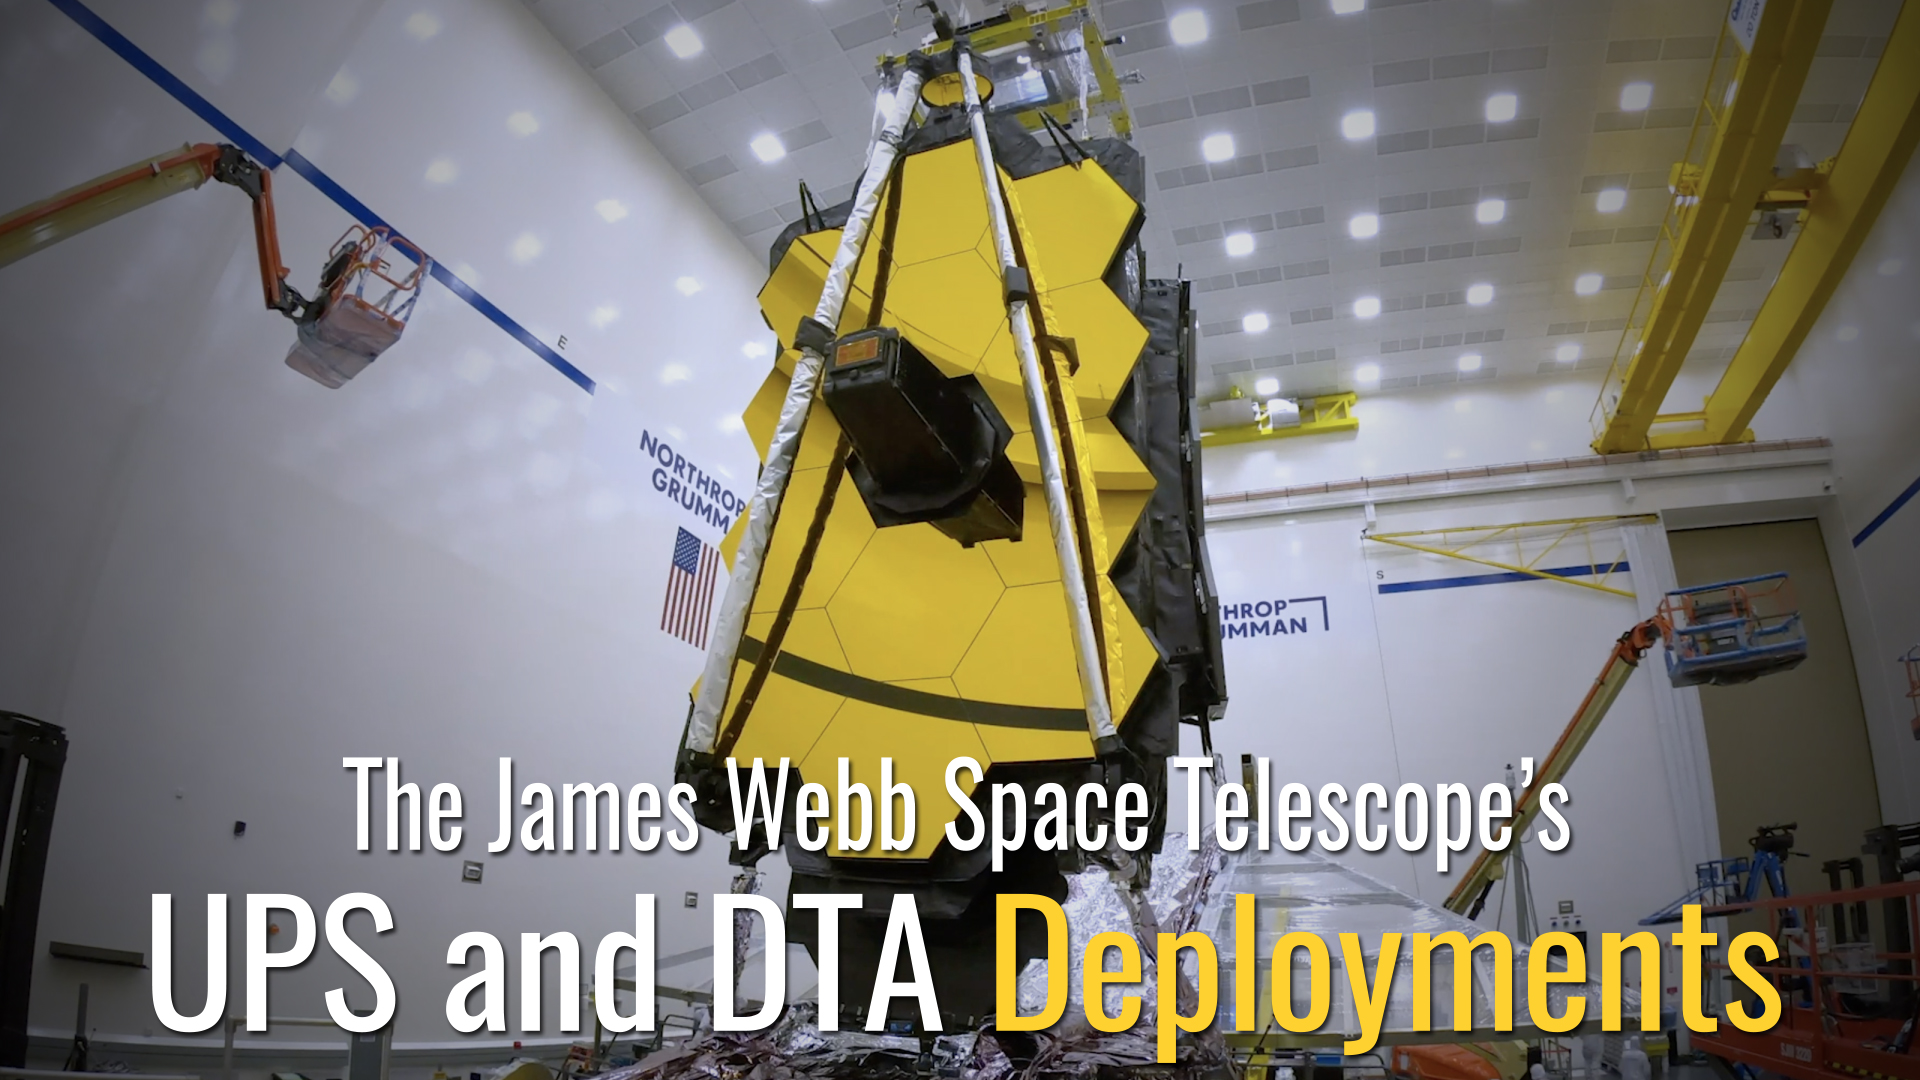 Social media video covering the James Webb Space Telescopes UPS and DTA deployments at Northrop Grumman in Redondo Beach, CA.  